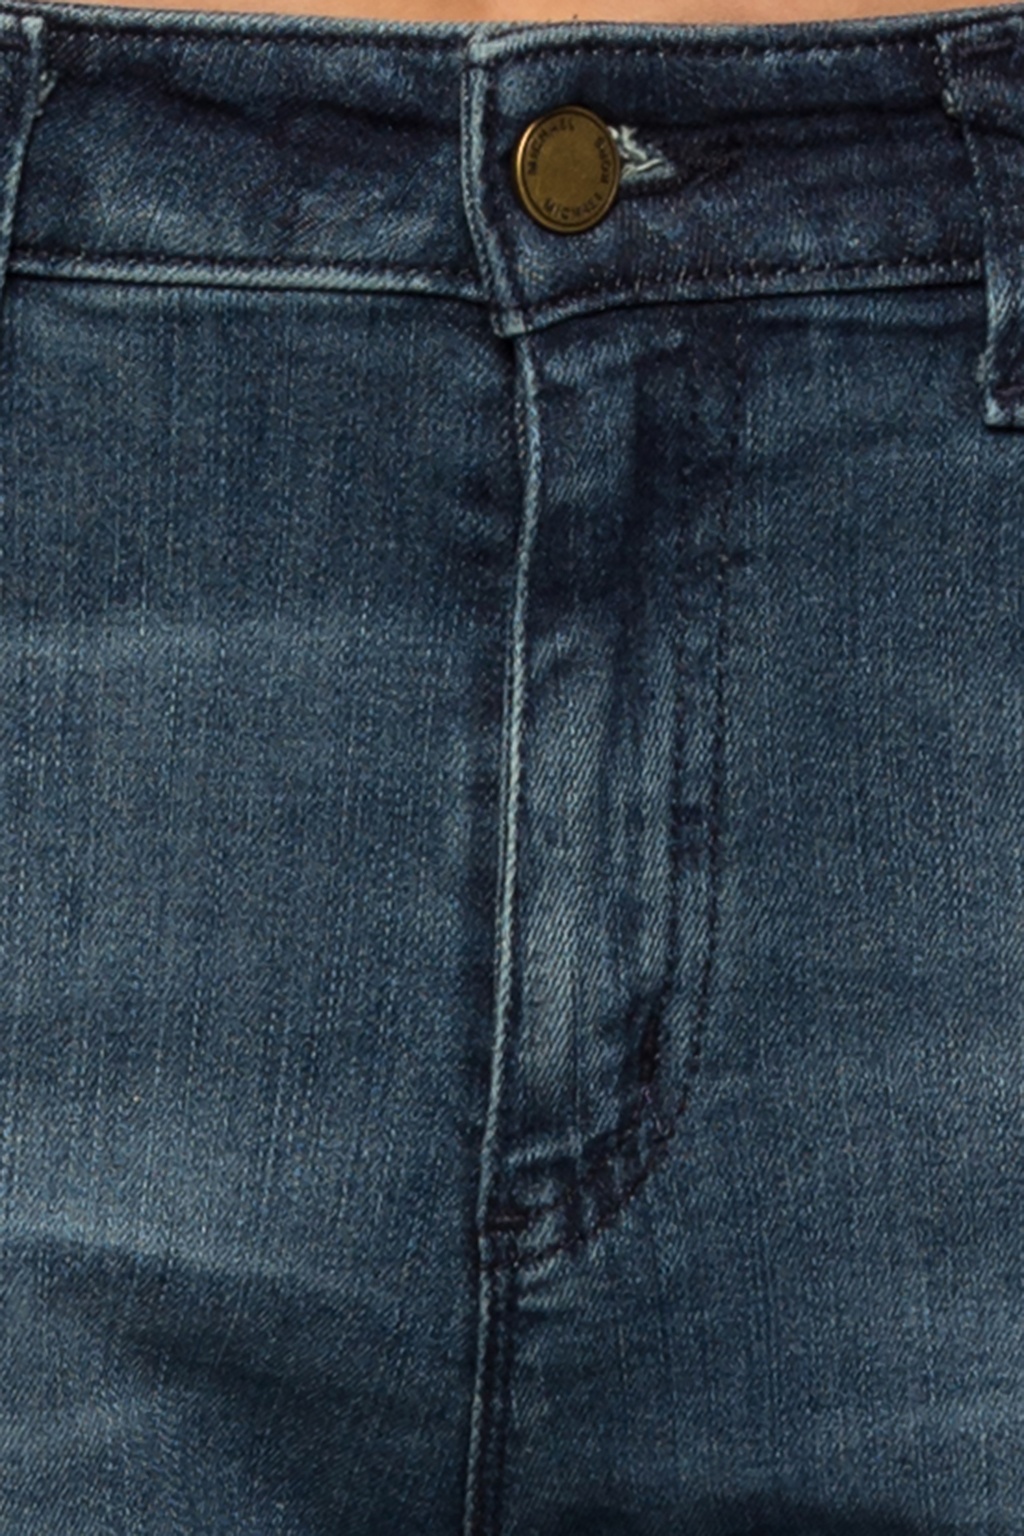 michael kors distressed jeans